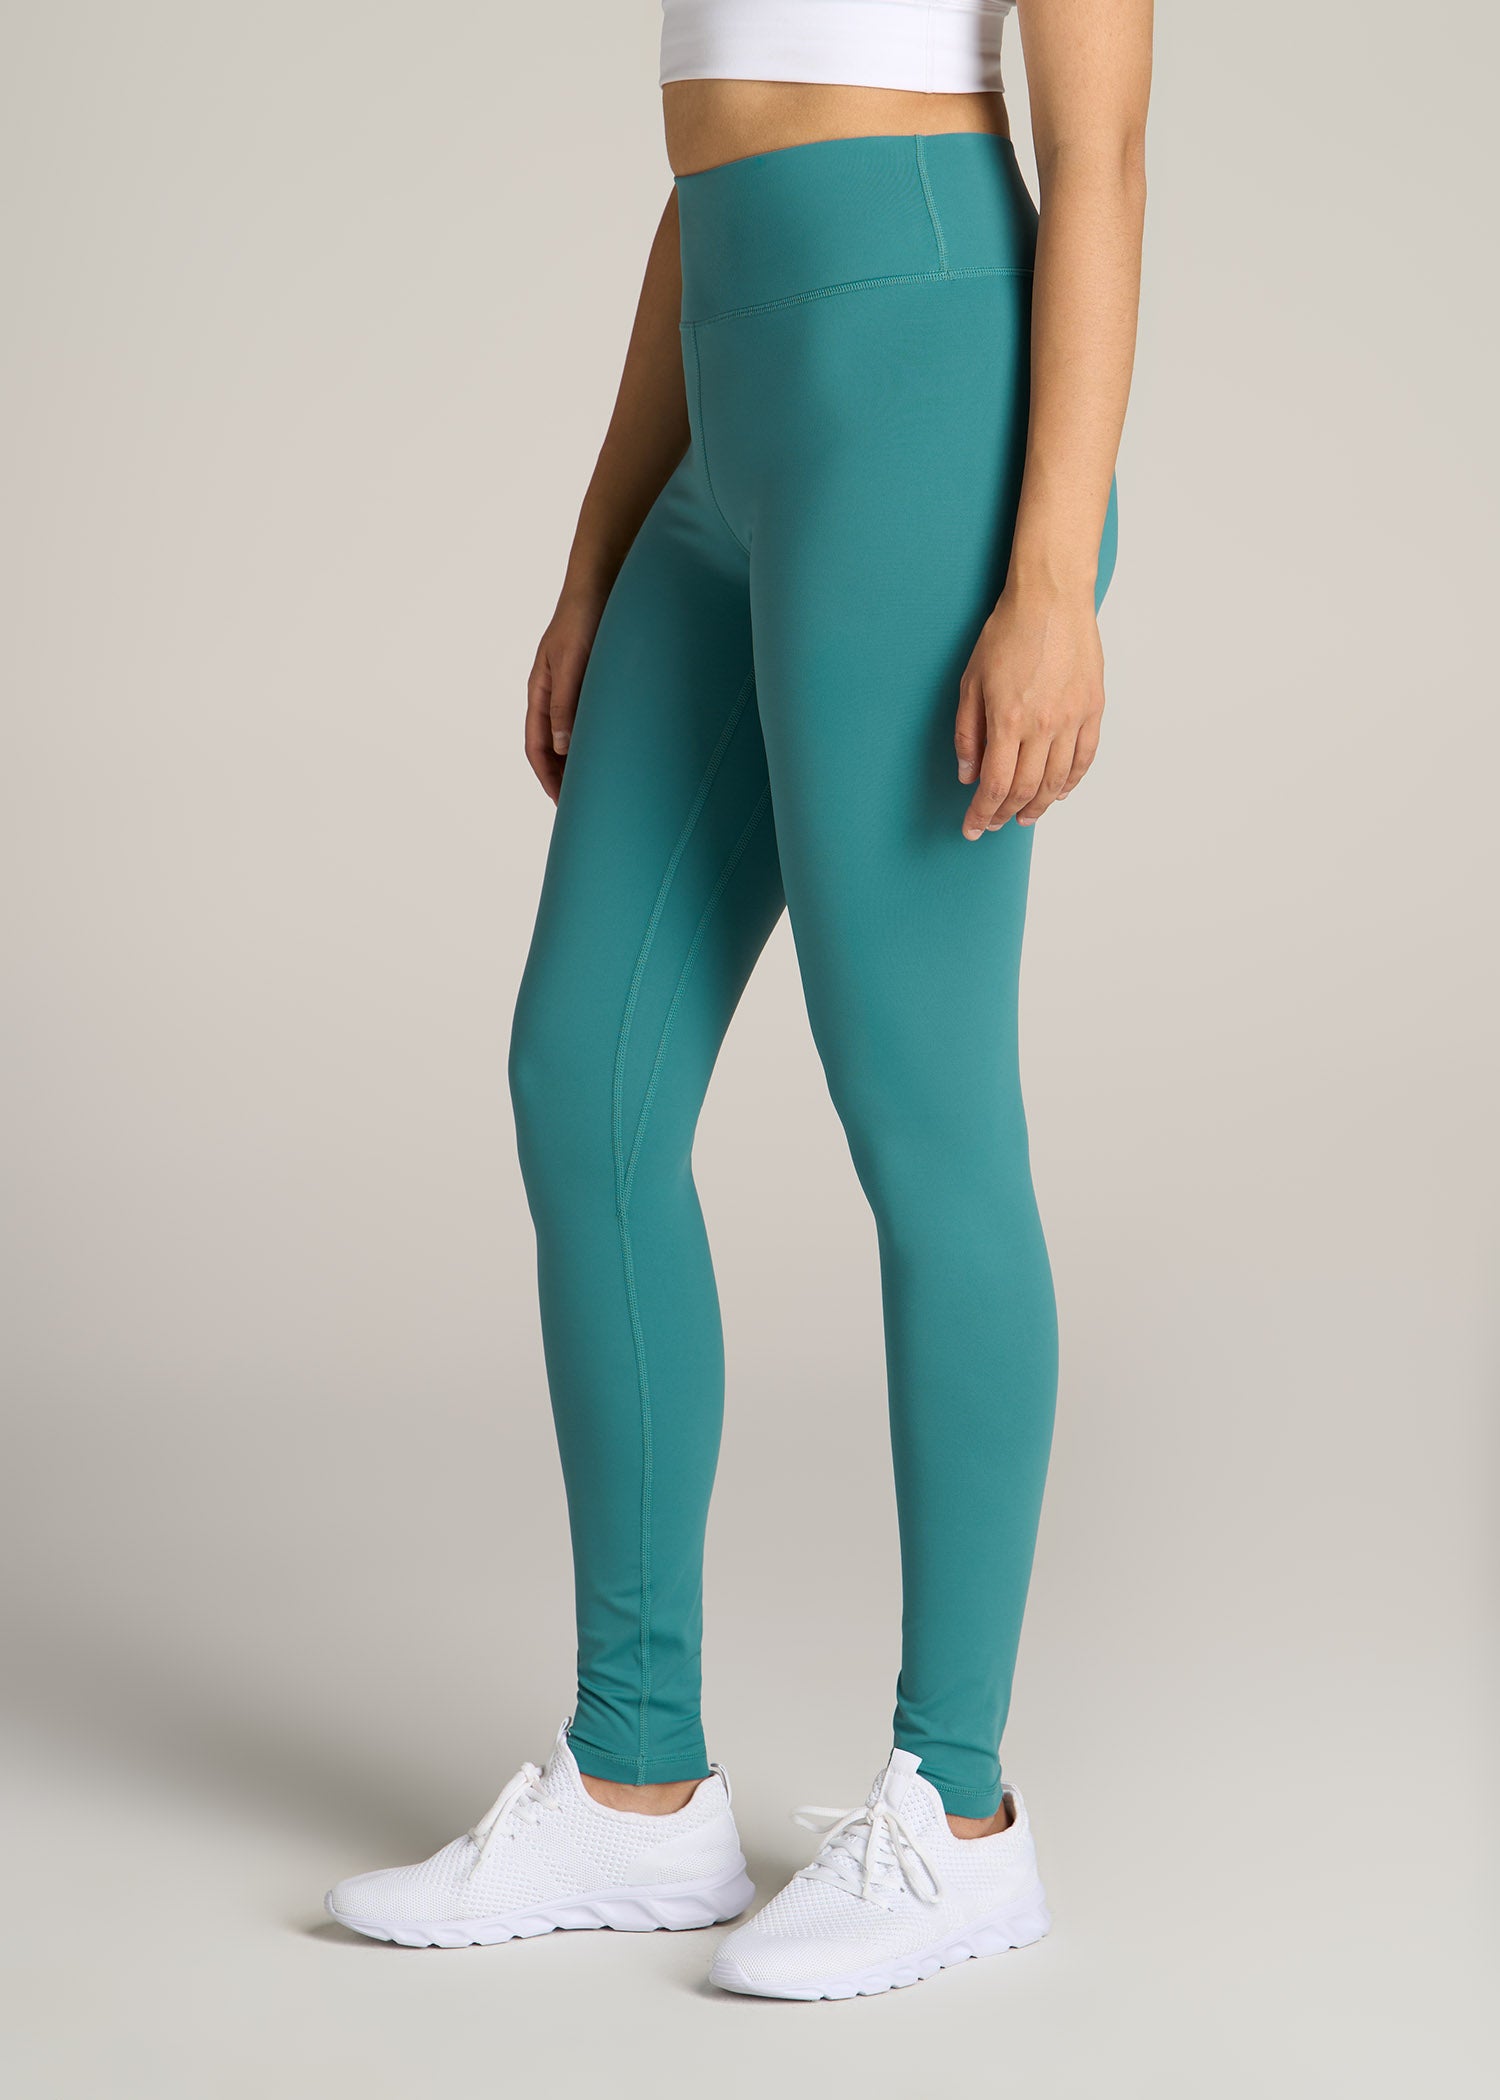 Clothing - Z.N.E. Leggings (Plus Size) - Turquoise